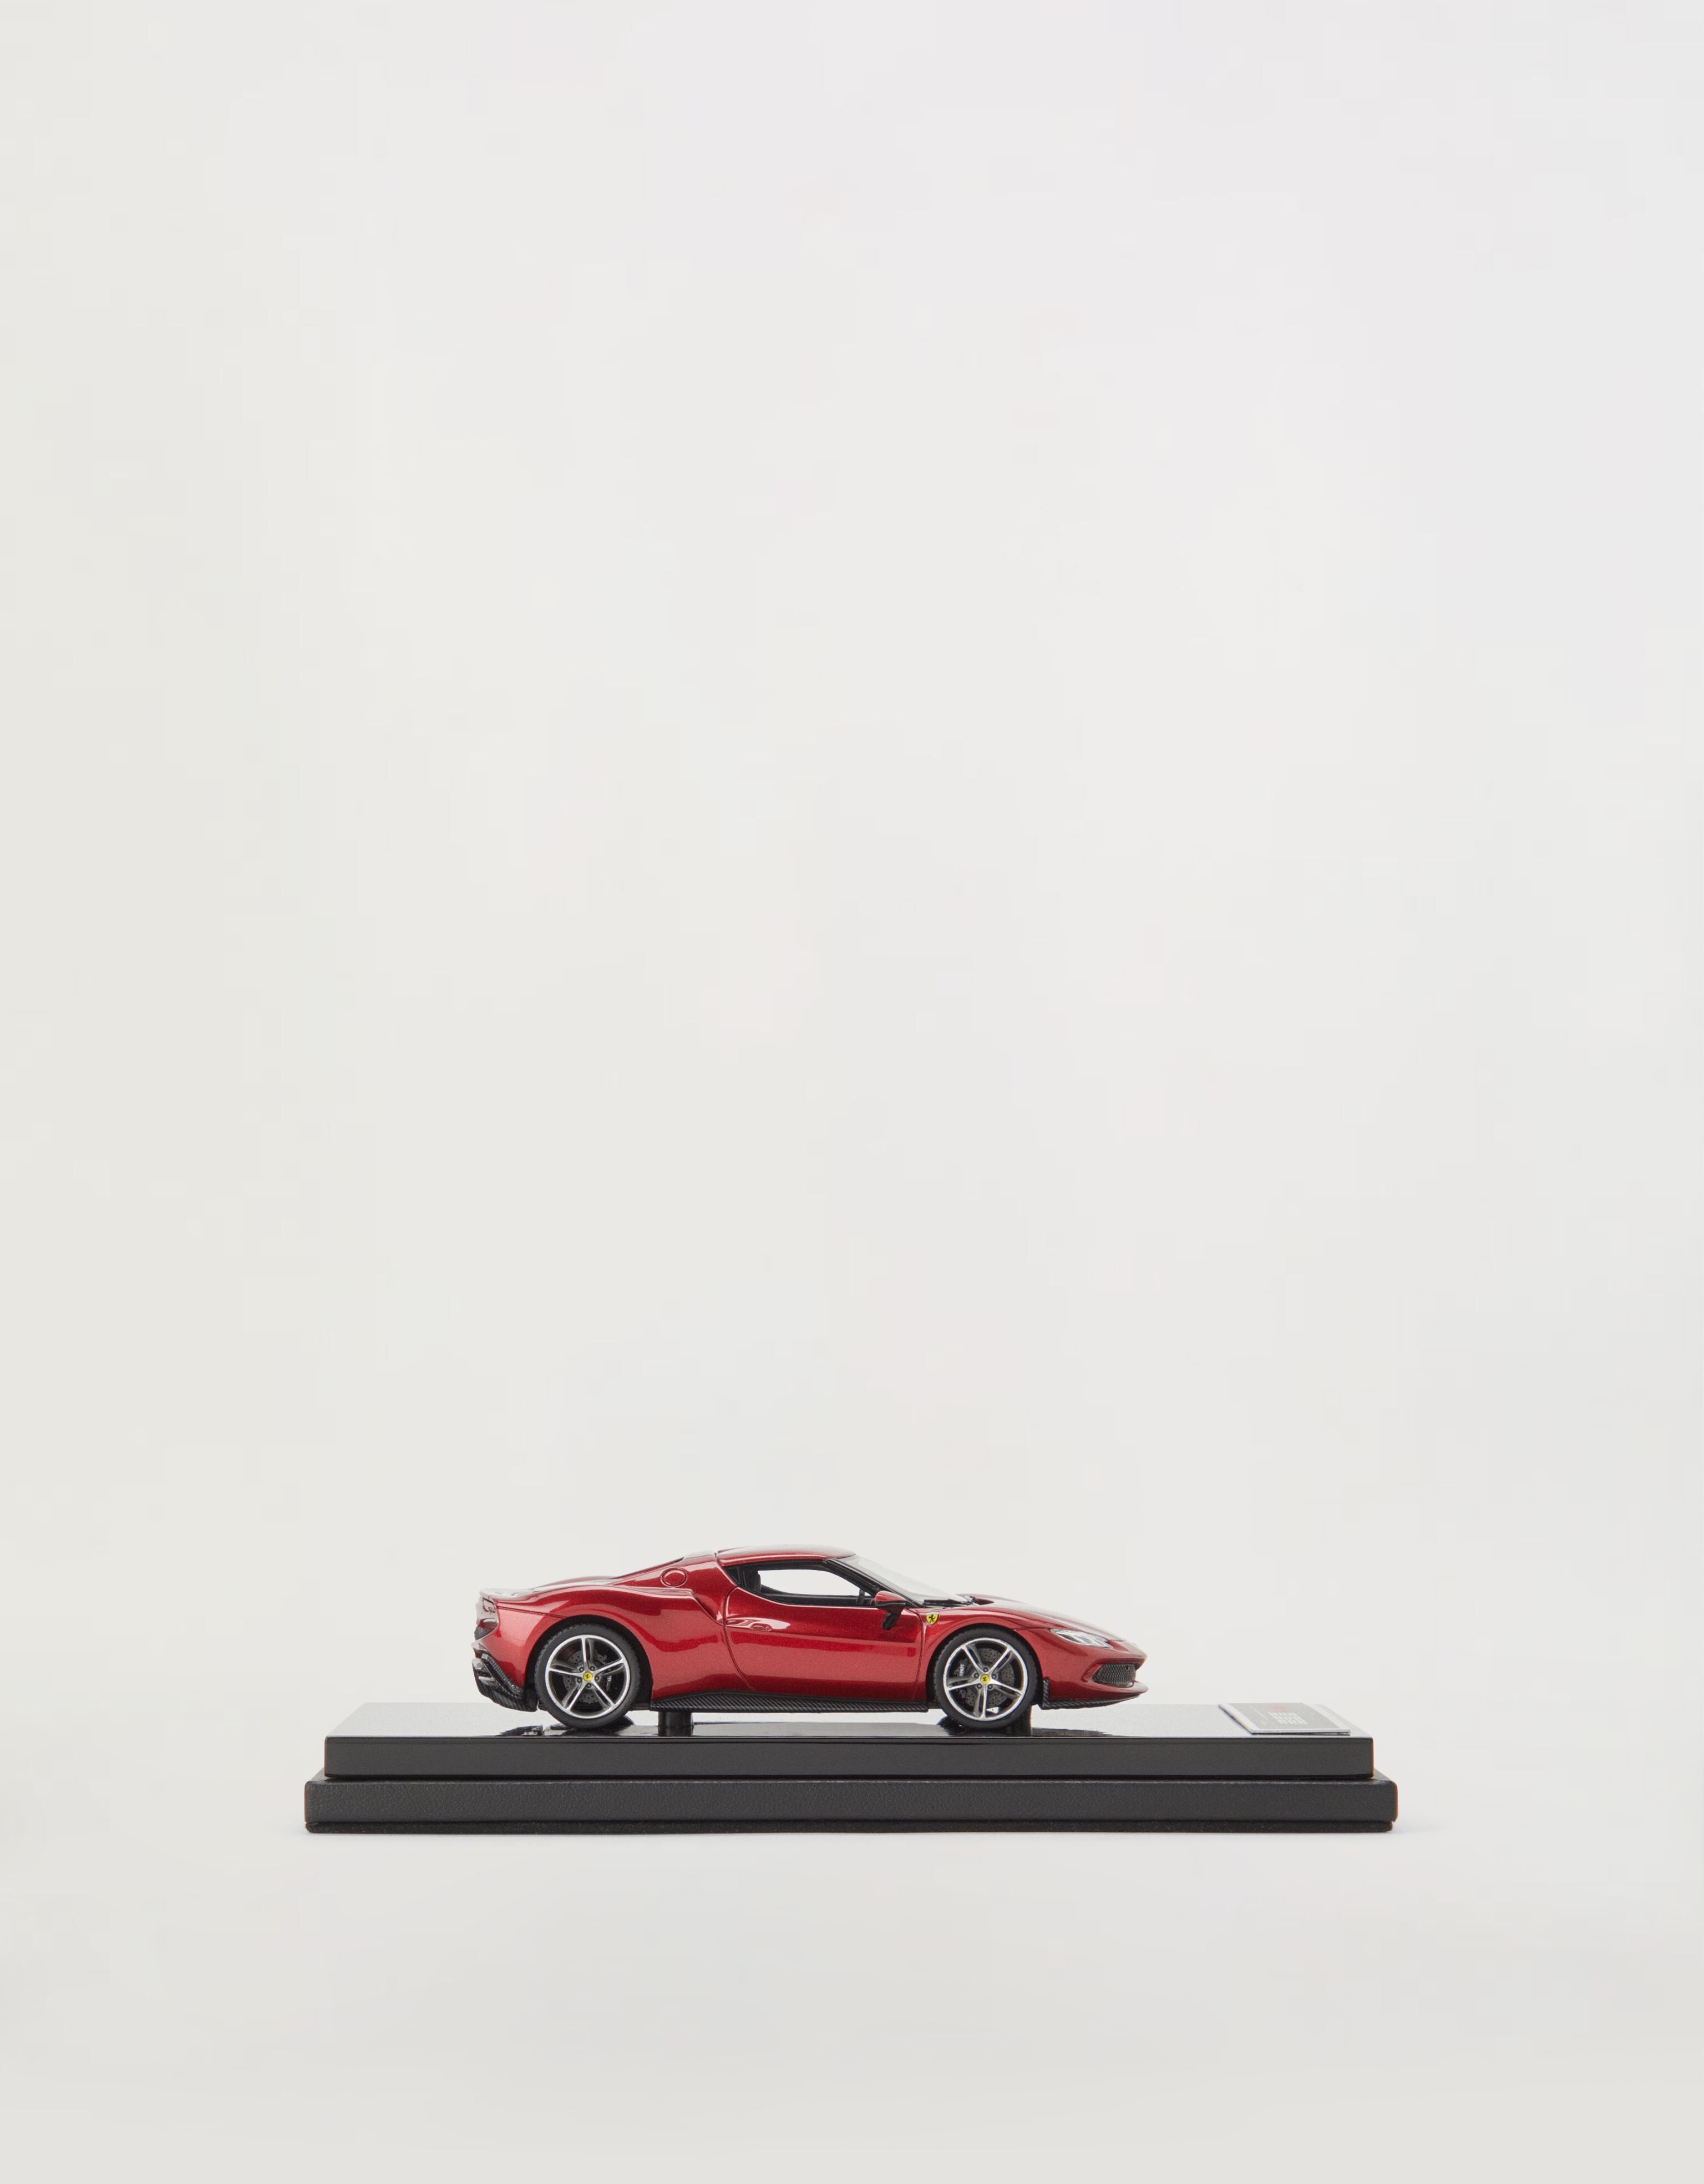 Ferrari Maqueta Ferrari 296 GTB a escala 1:43 Rosso Corsa 20168f